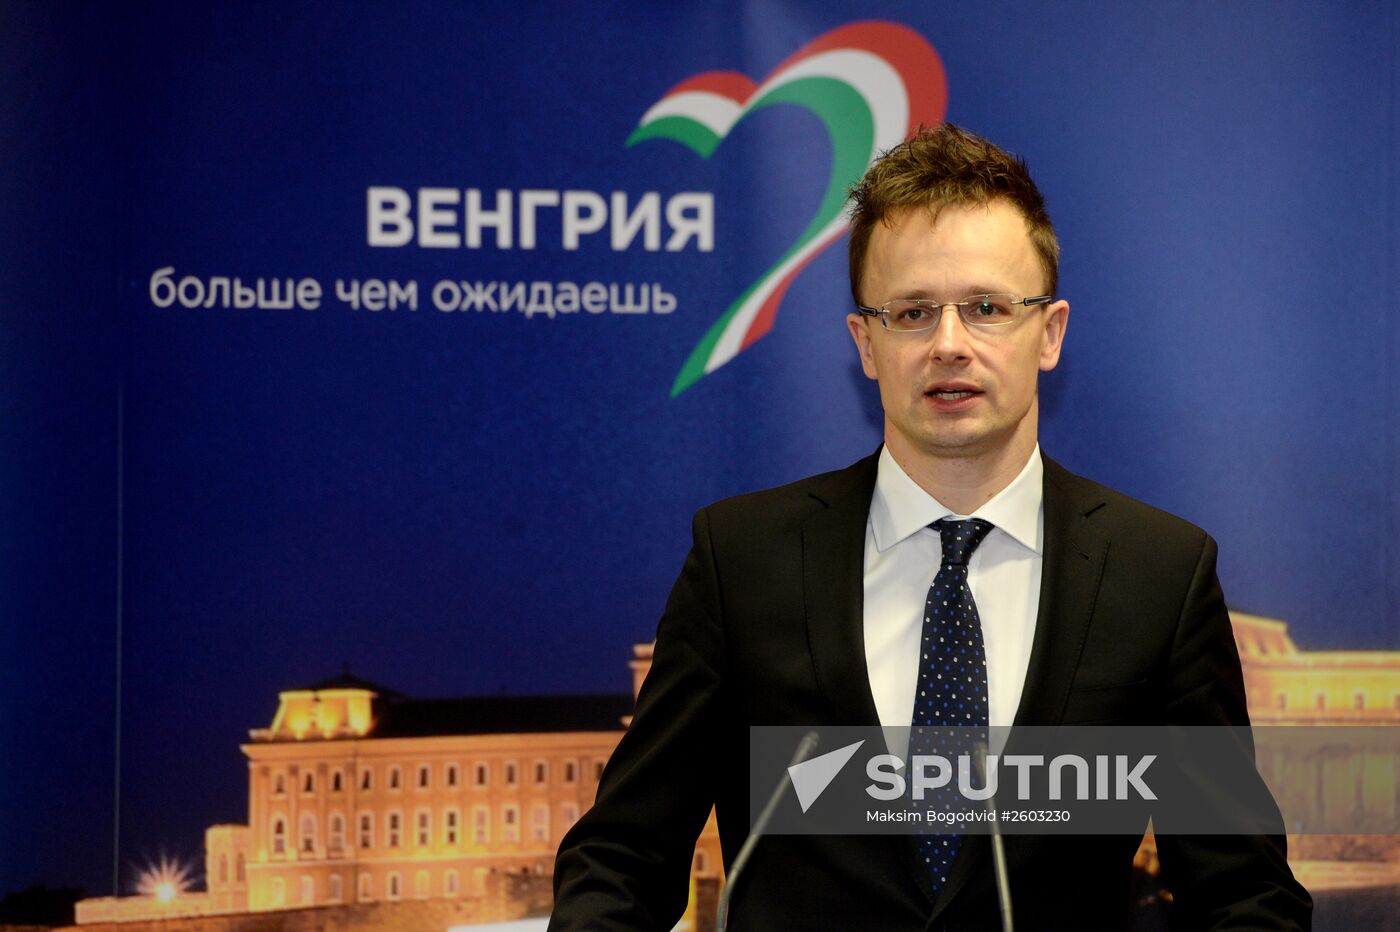 Hungary opens Consulate General in Kazan